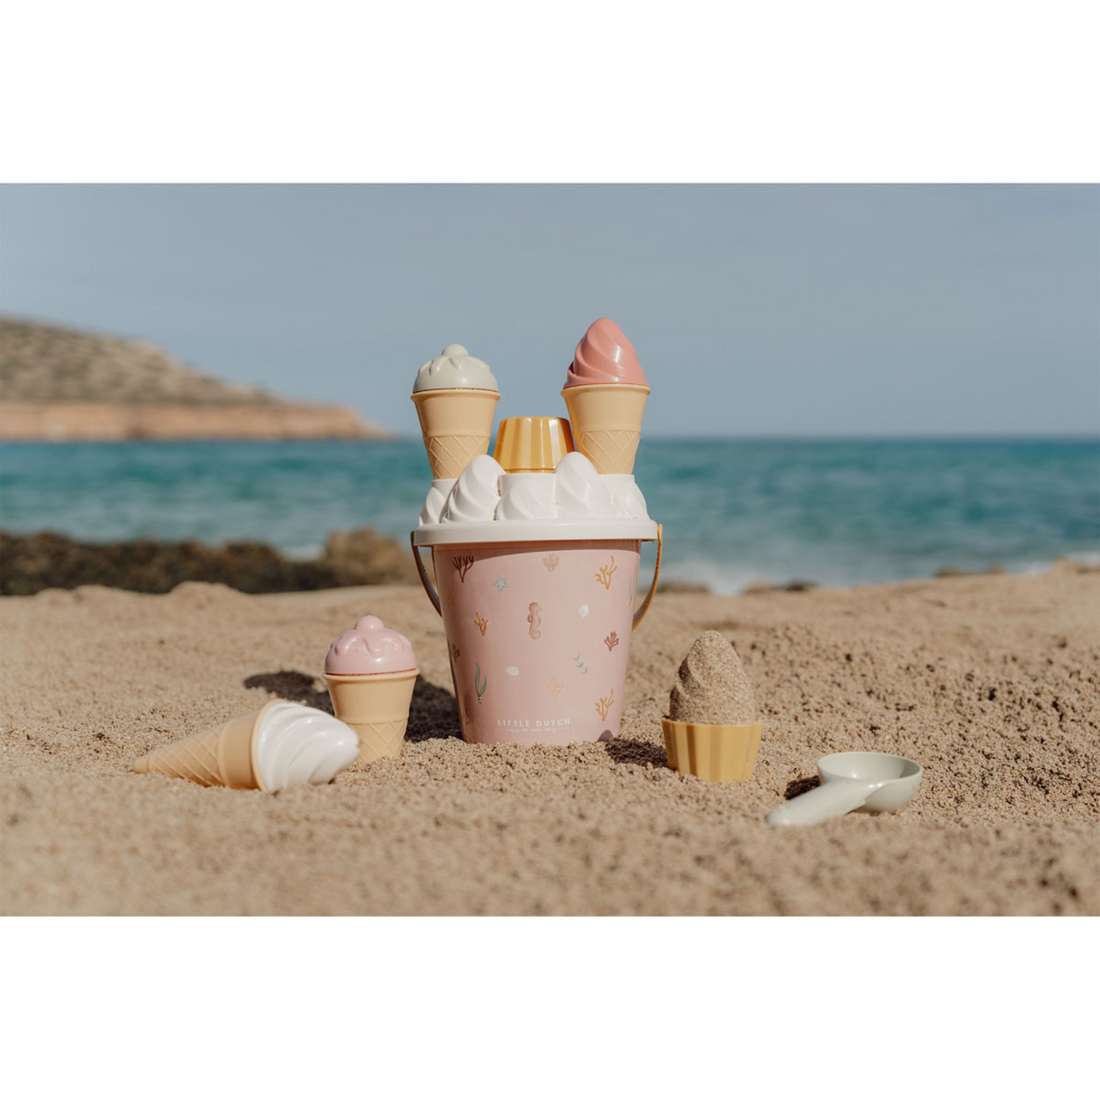 Sand toys - ice cream making set Ocean pink 